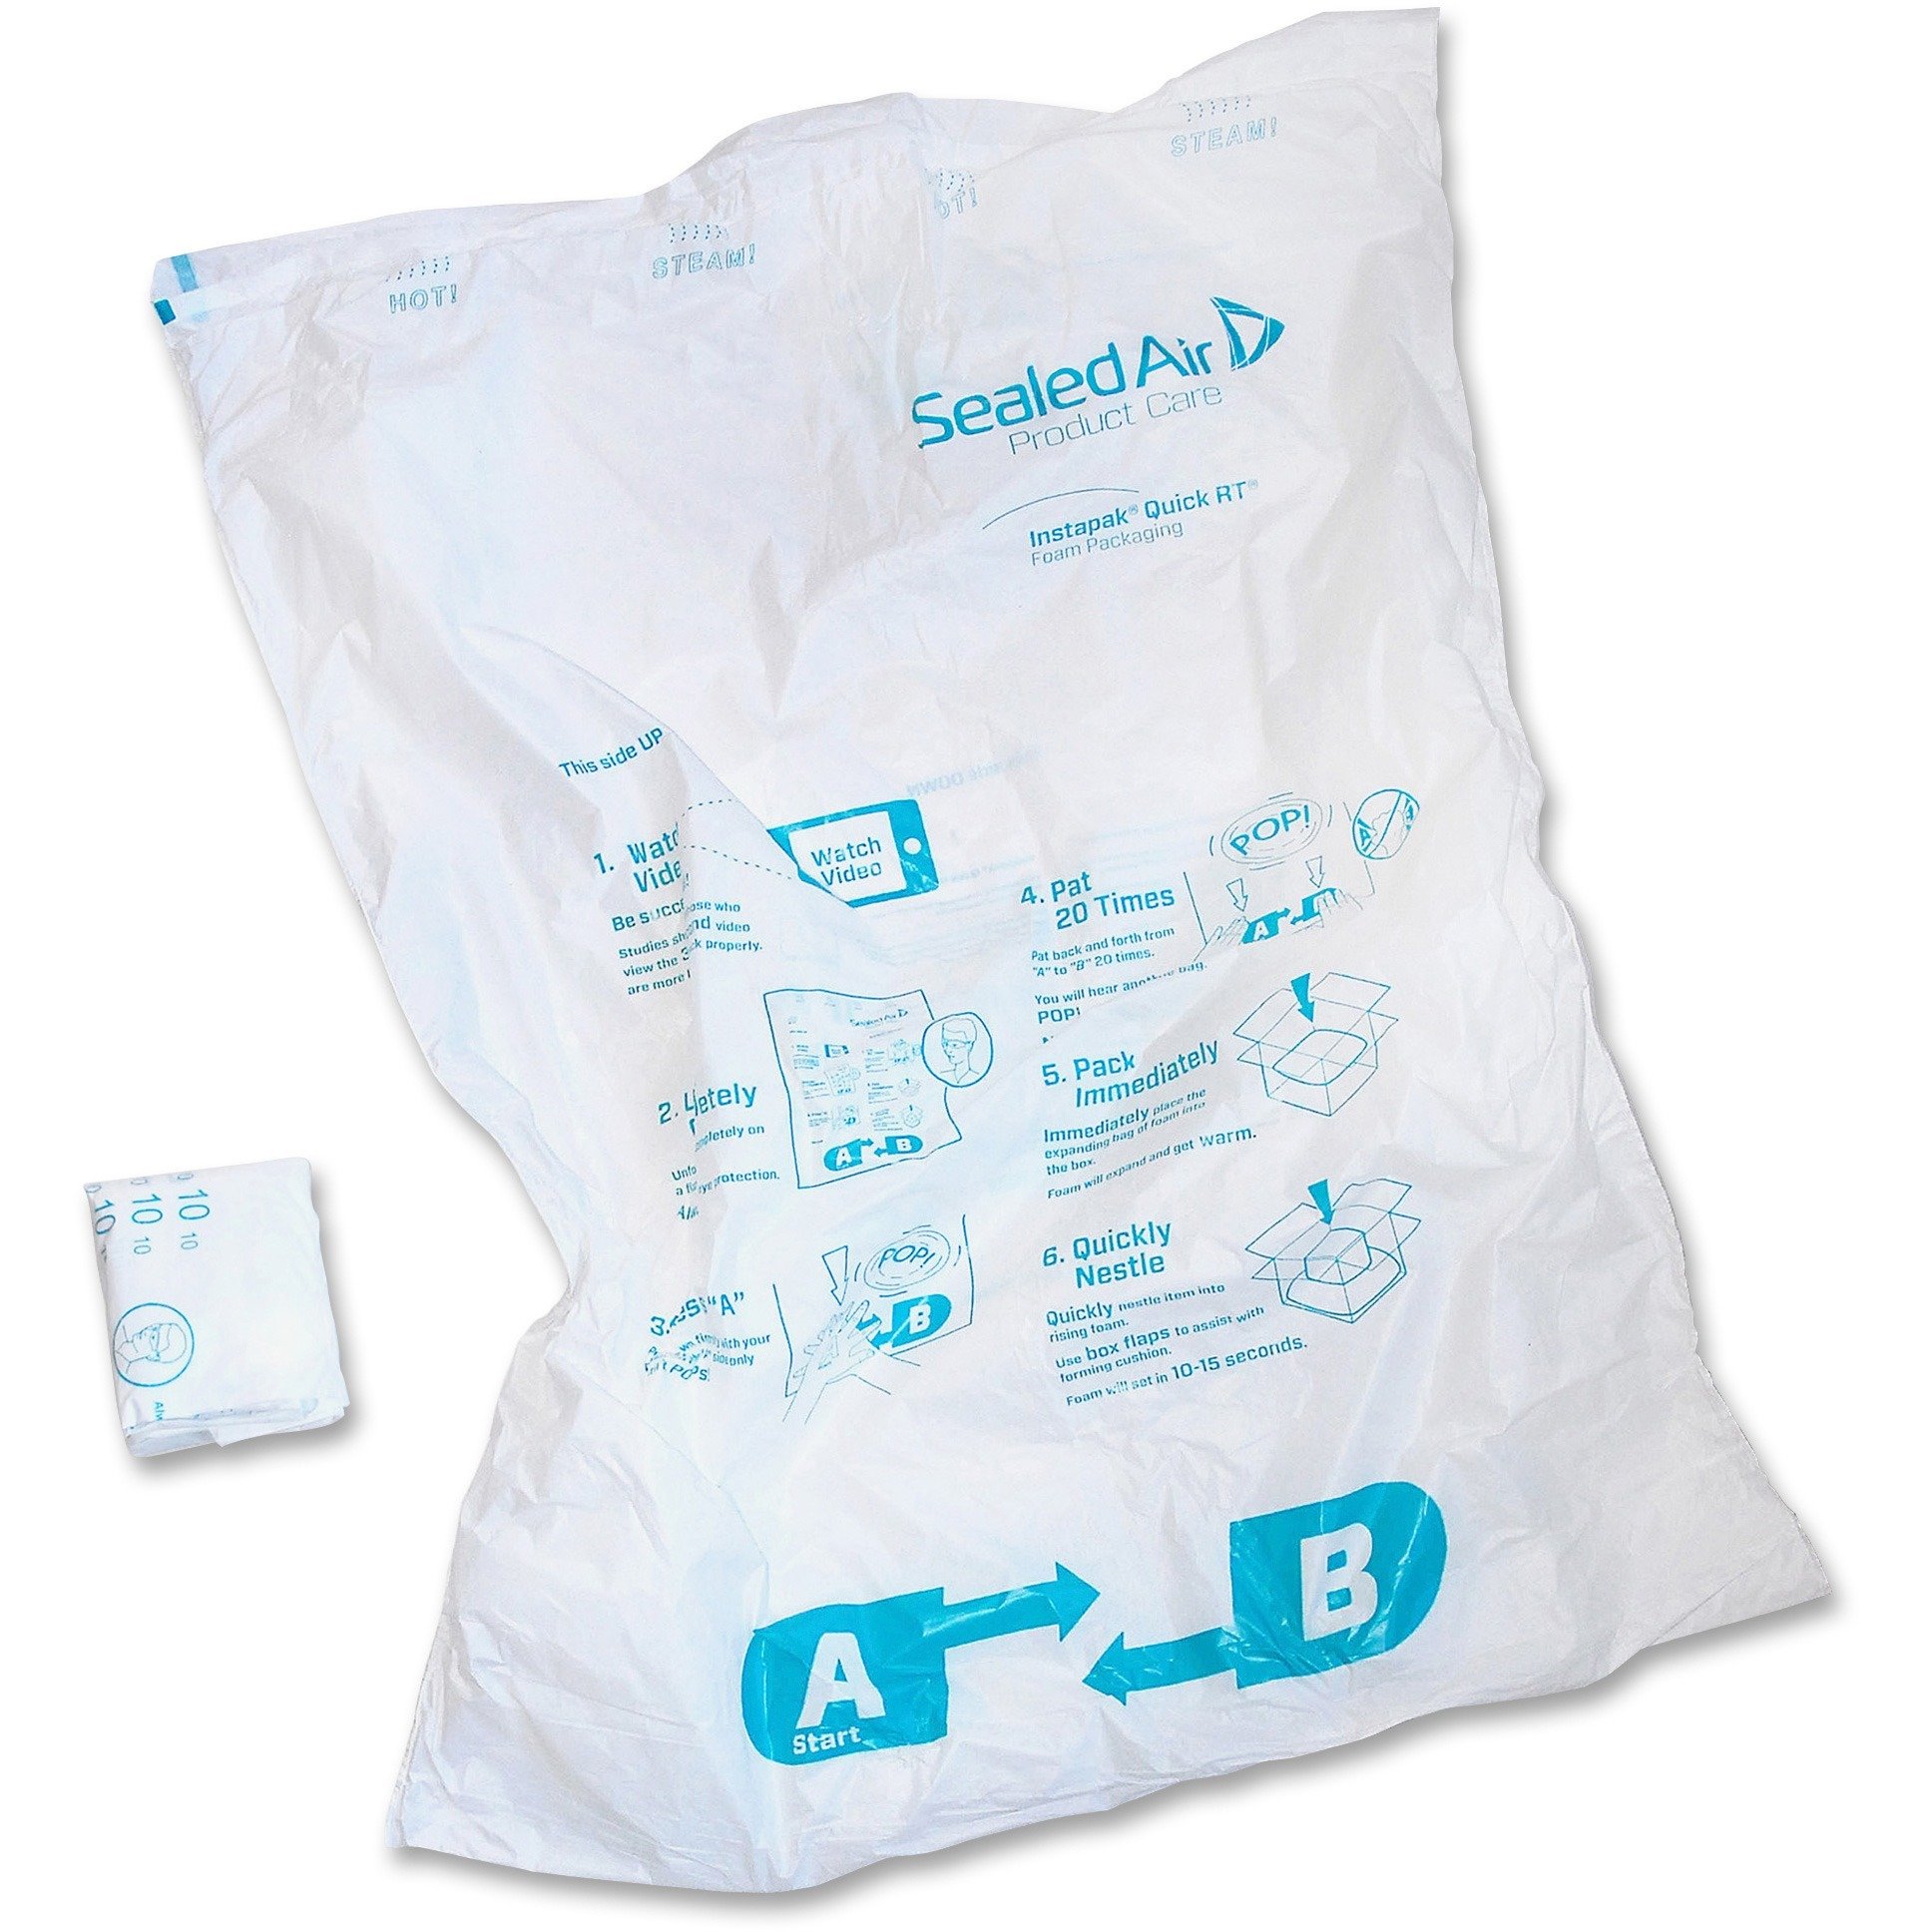 Instapak Quick RT Expandable Foam Bags 15